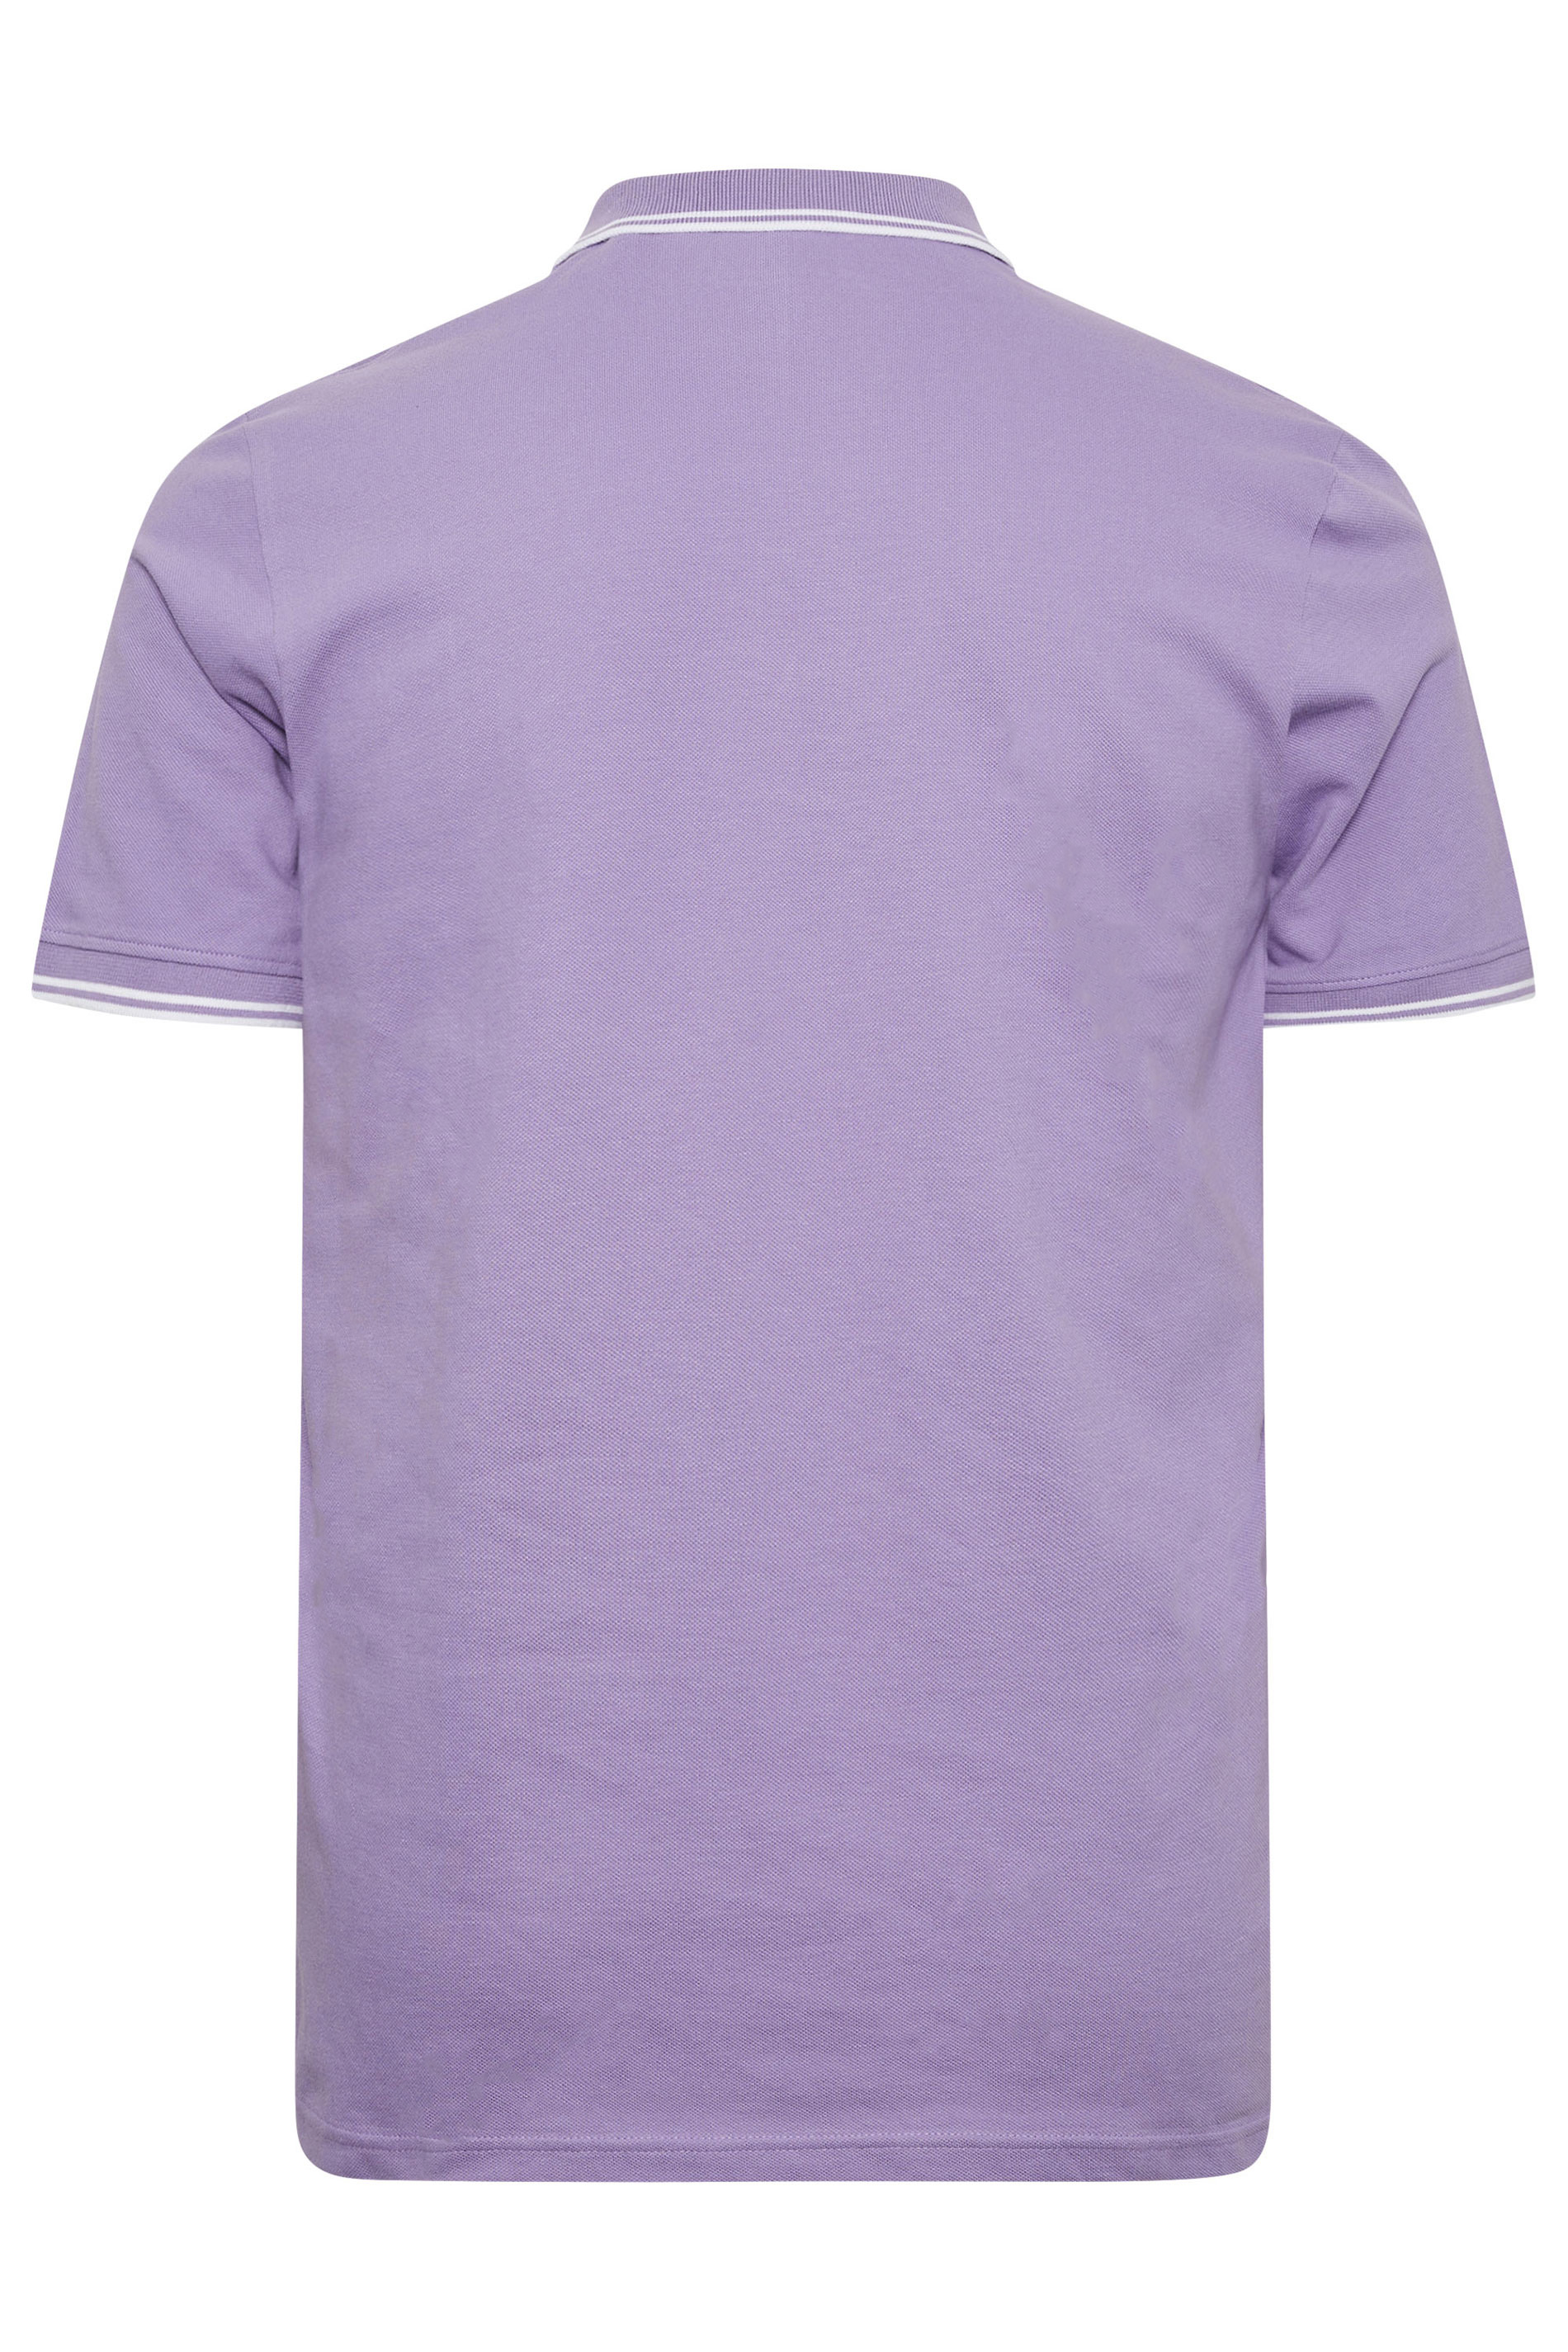 BadRhino Big & Tall Purple Tipped Polo Shirt | BadRhino  3